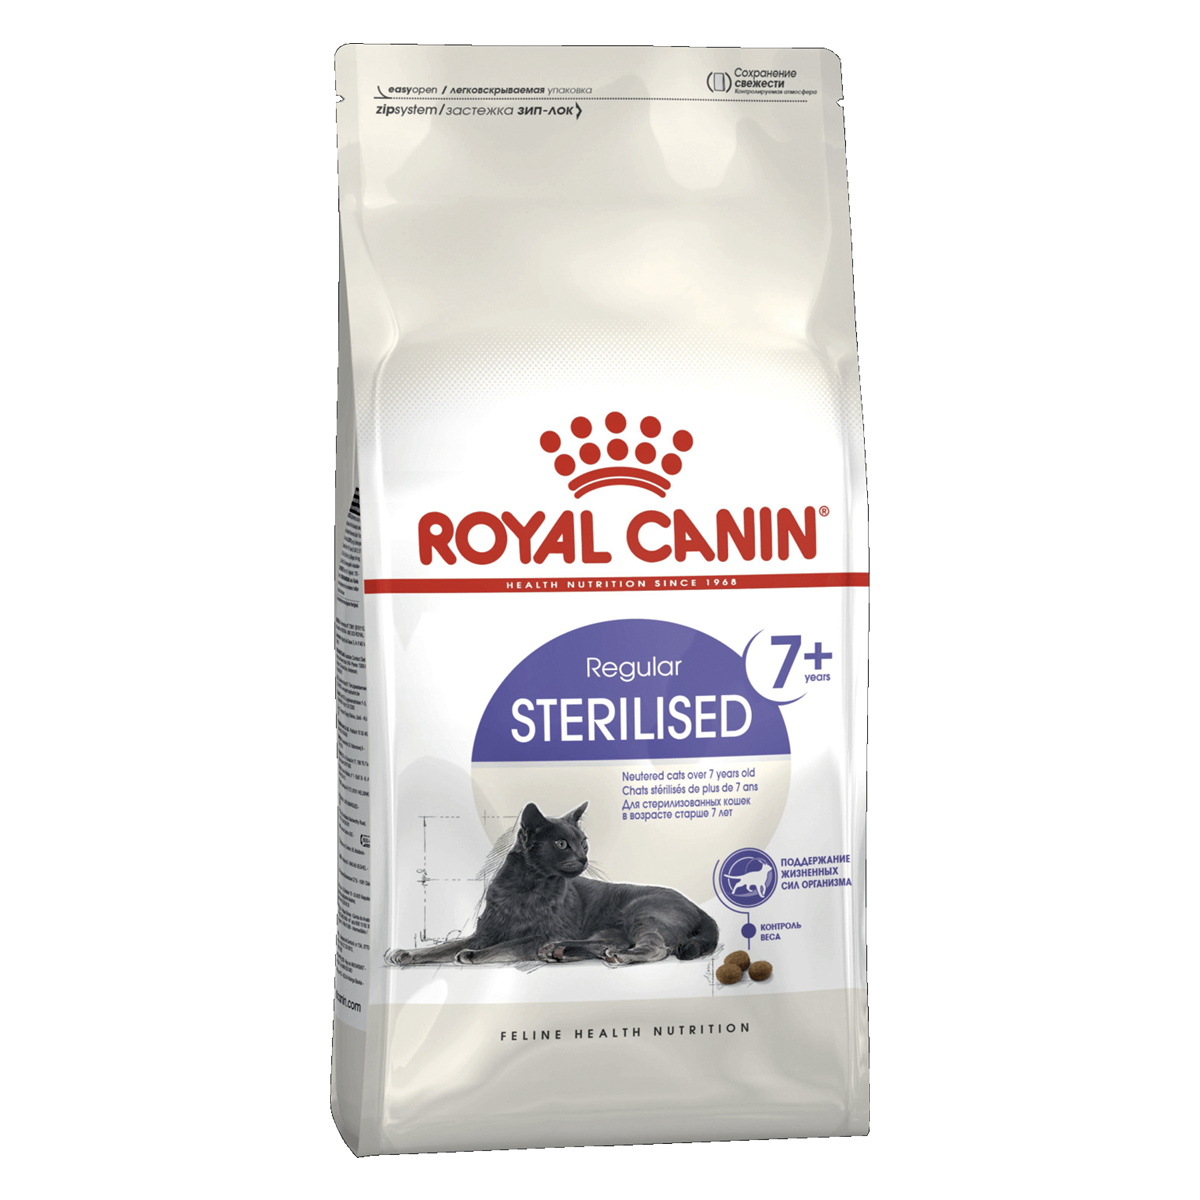 Royal Canin Sterilised 7+, 400 г - корм Роял Канин для стерилизованных кошек